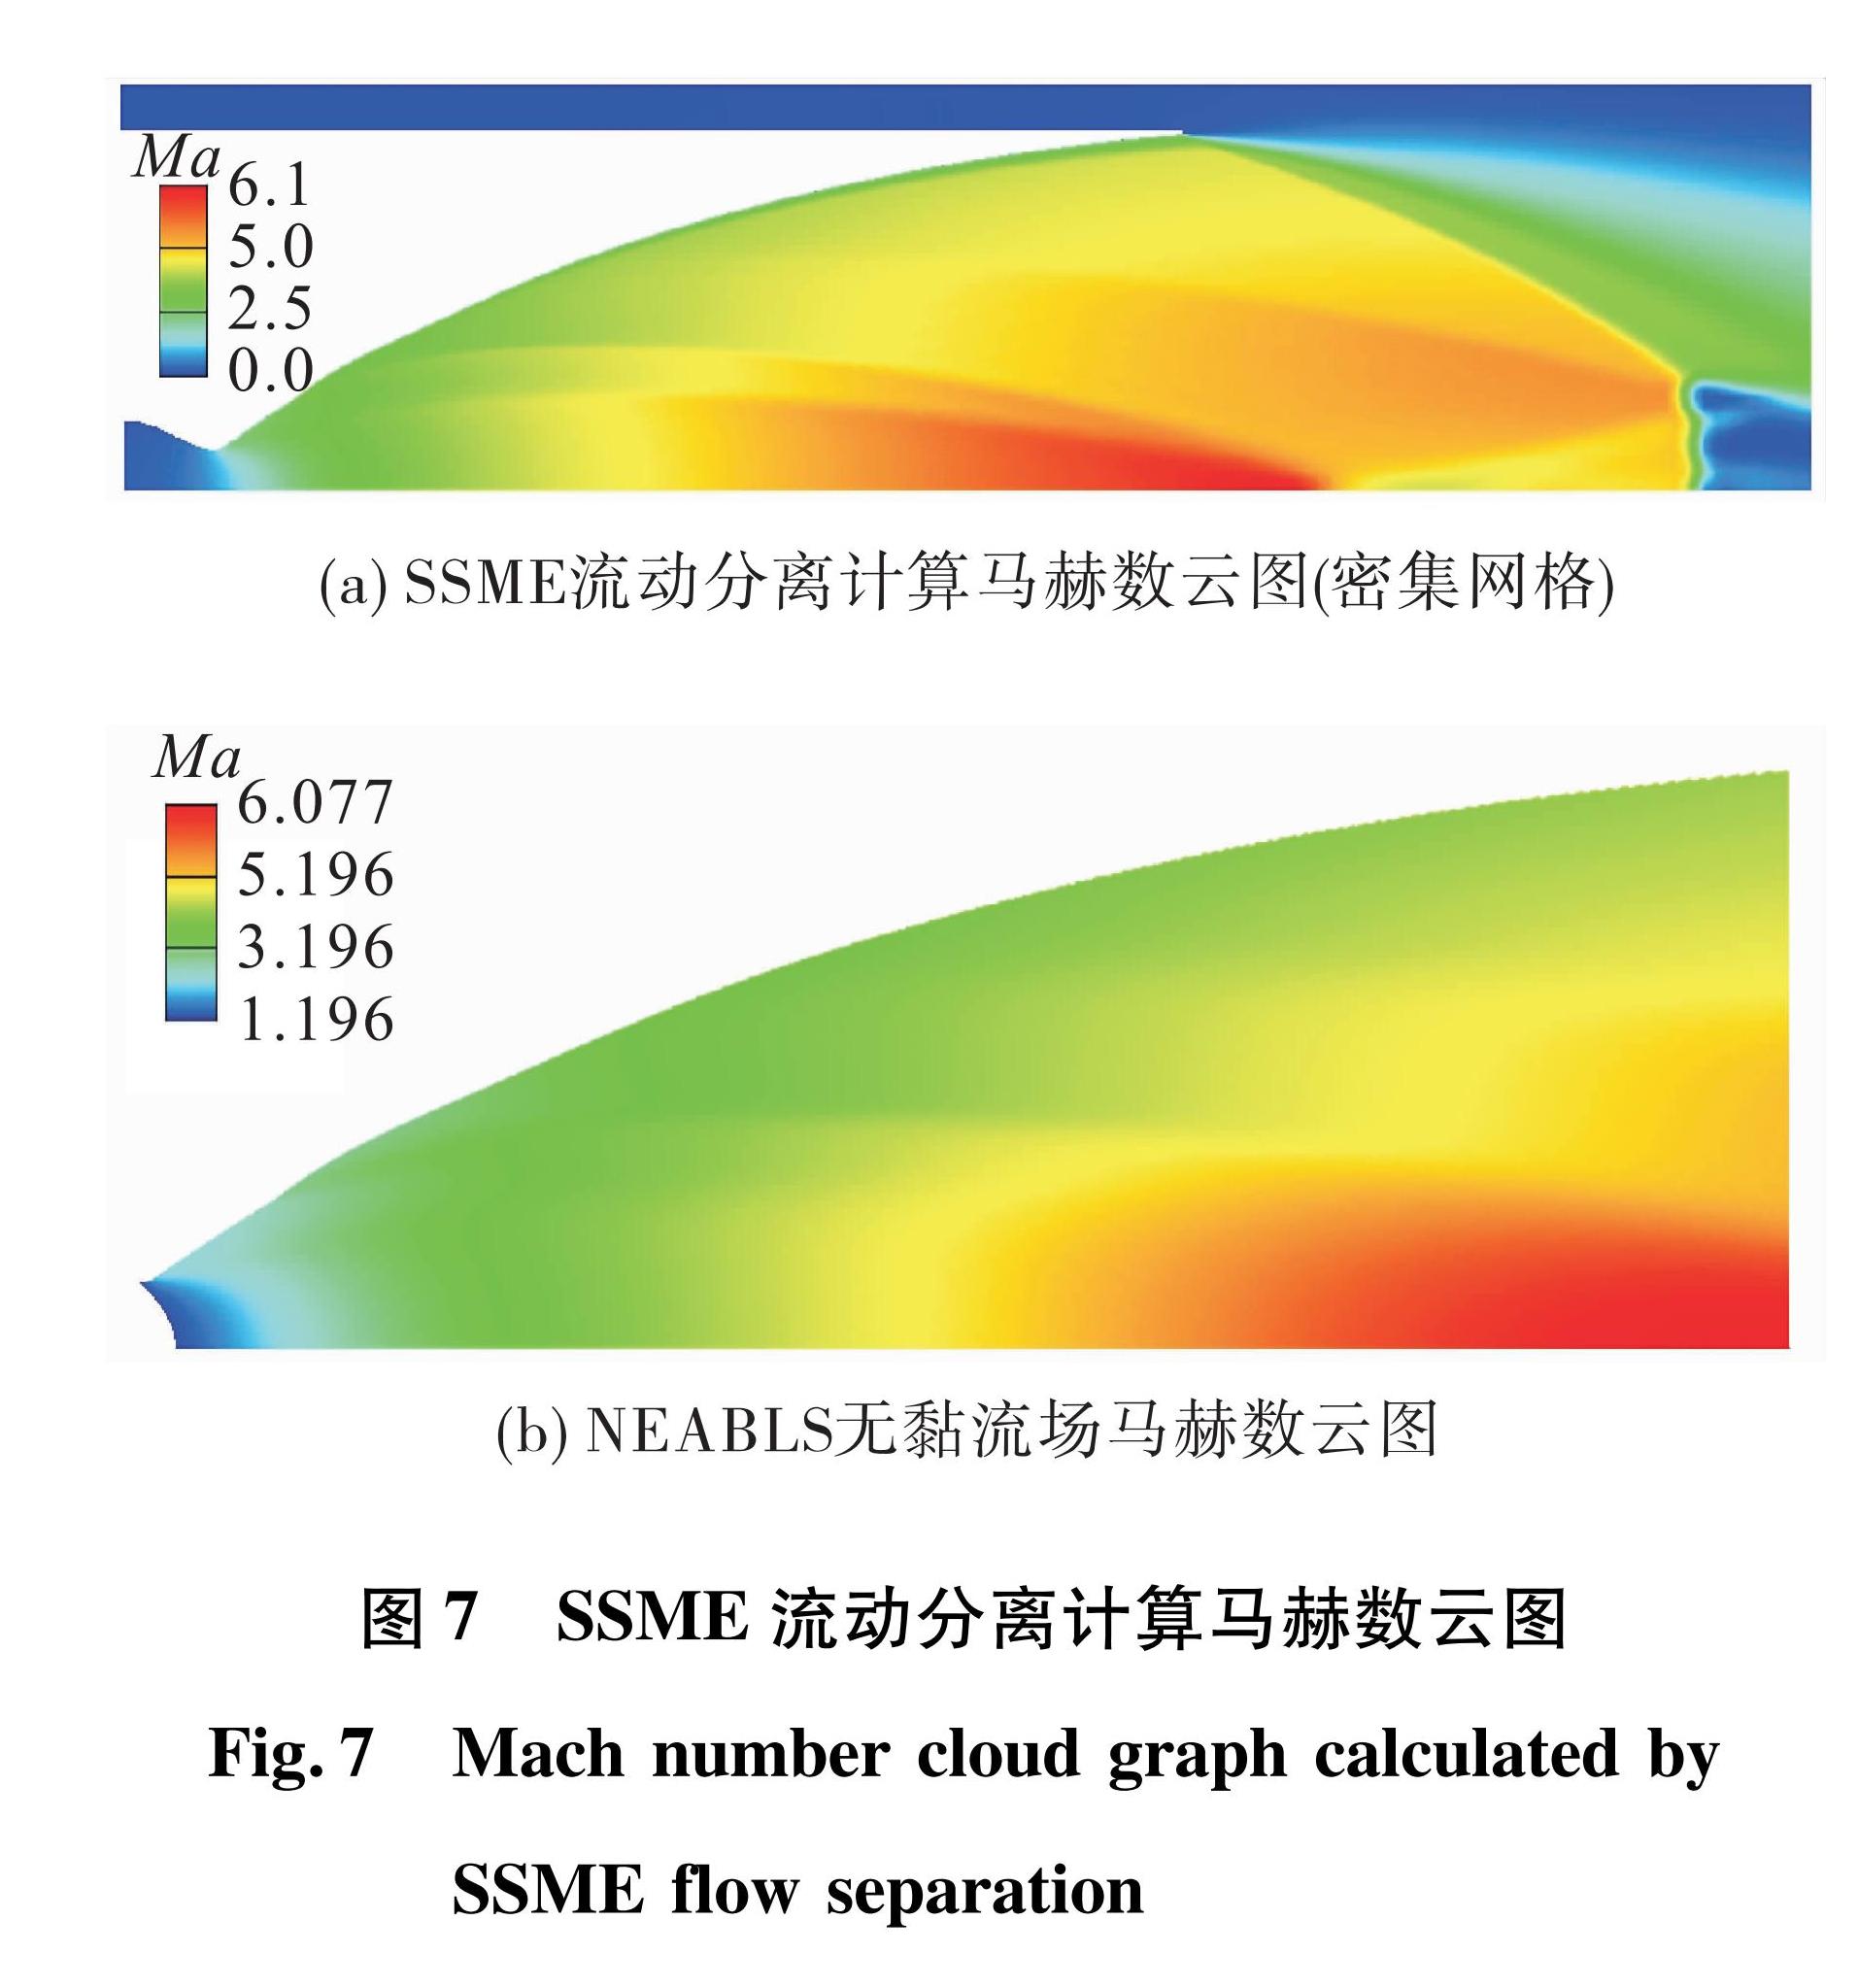 图7 SSME流动分离计算马赫数云图<br/>Fig.7 Mach number cloud graph calculated by SSME flow separation